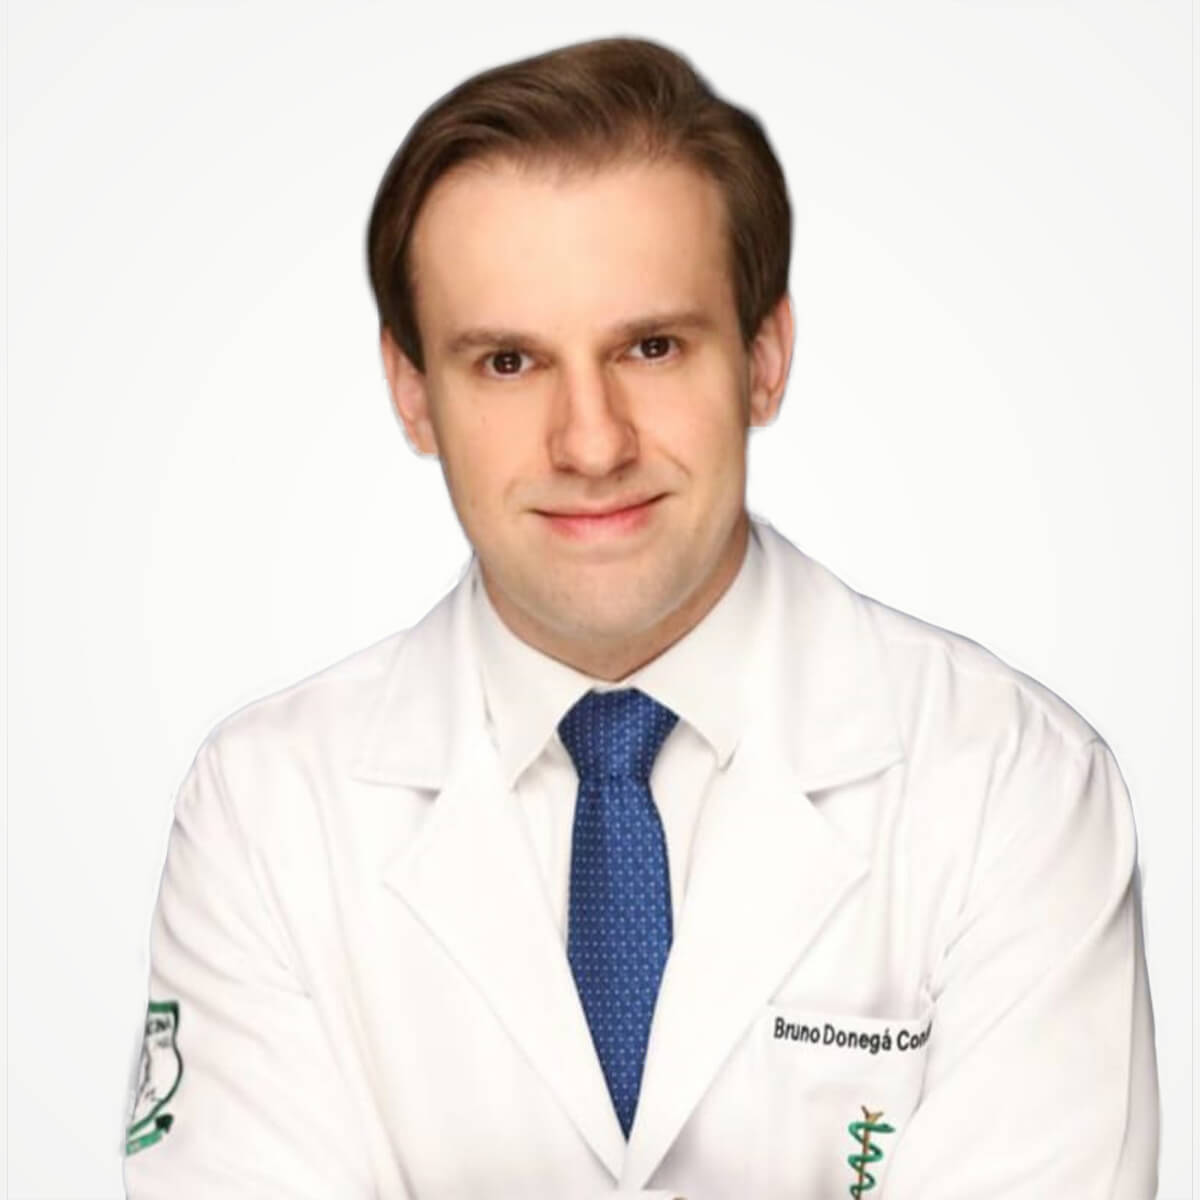 Dr. Bruno Donegá Constantin